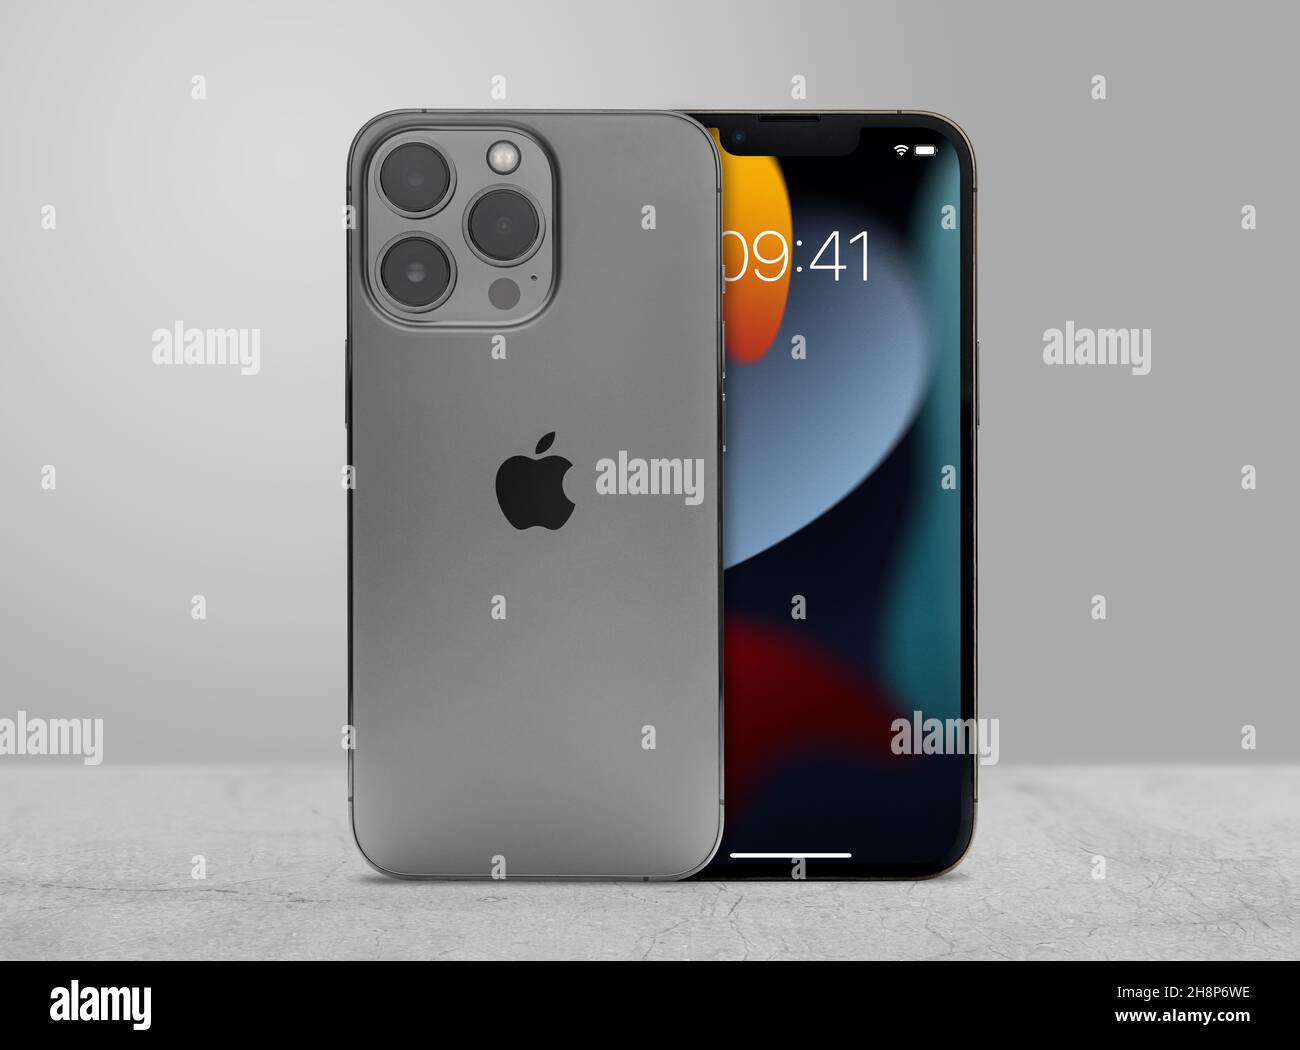 Antalya, Turkey - November 30, 2021: Newly released iphone 13 pro mockup set with back and front angles Stock Photo